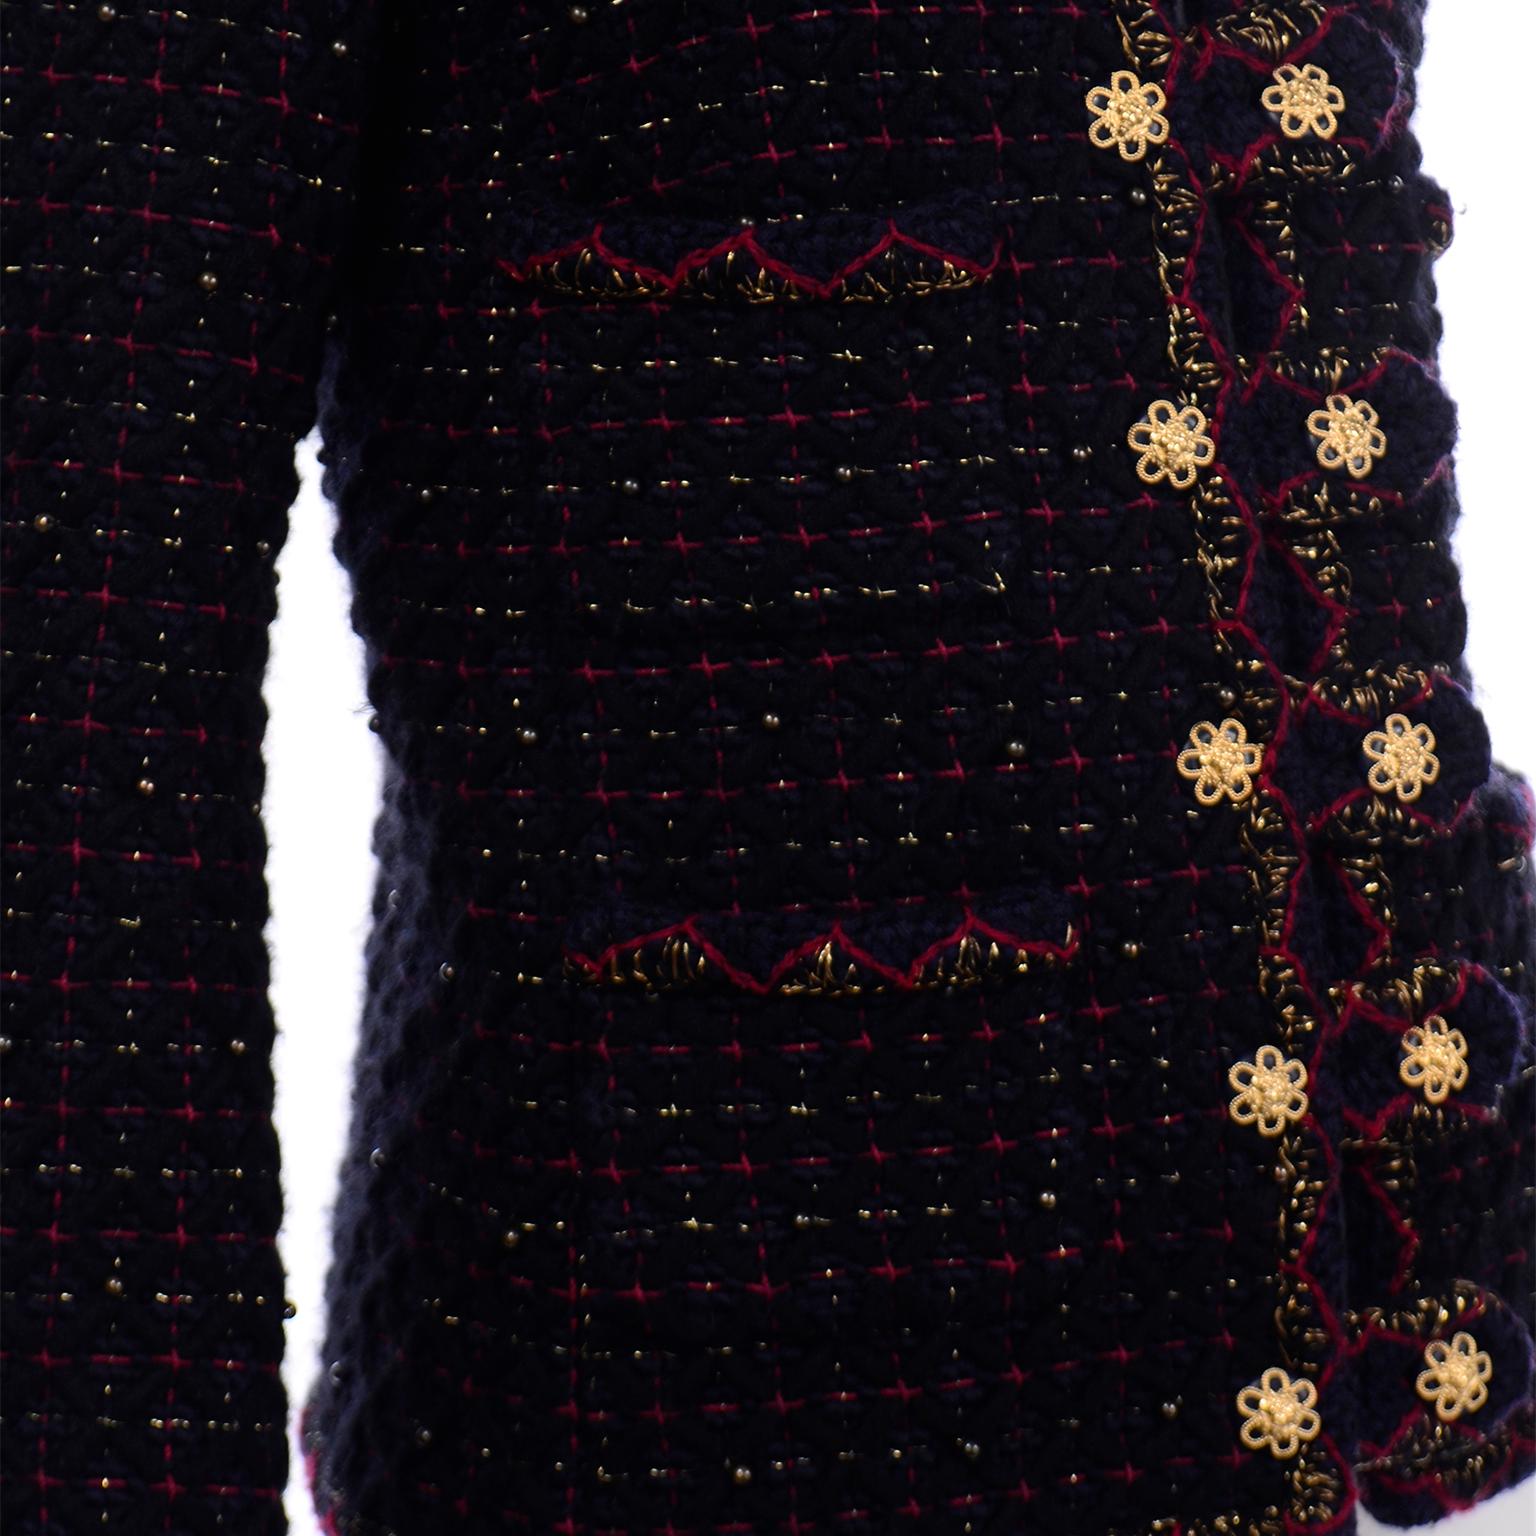 Chanel 2015 Paris Salzburg Collection $14250 Tweed Documented Runway Jacket 3